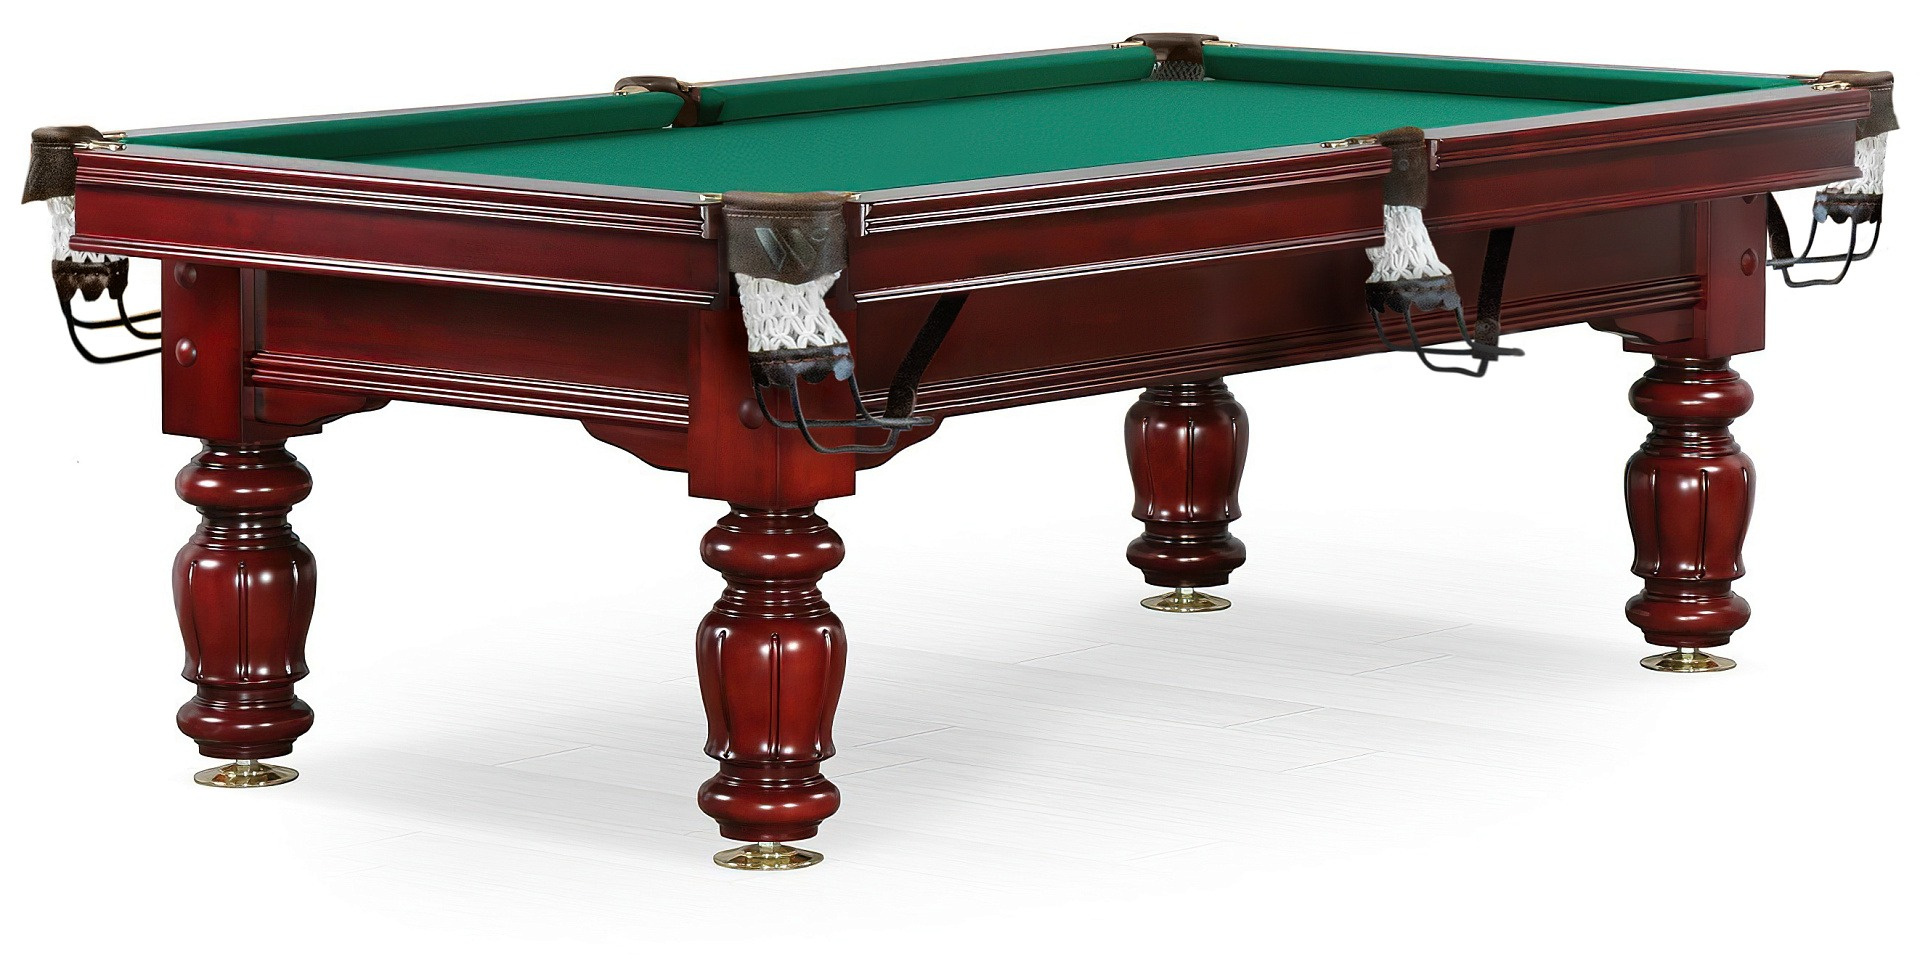 Weekend Billiard Classic II - 8 футов (махагон) из каталога товаров для бильярда в Санкт-Петербурге по цене 148500 ₽